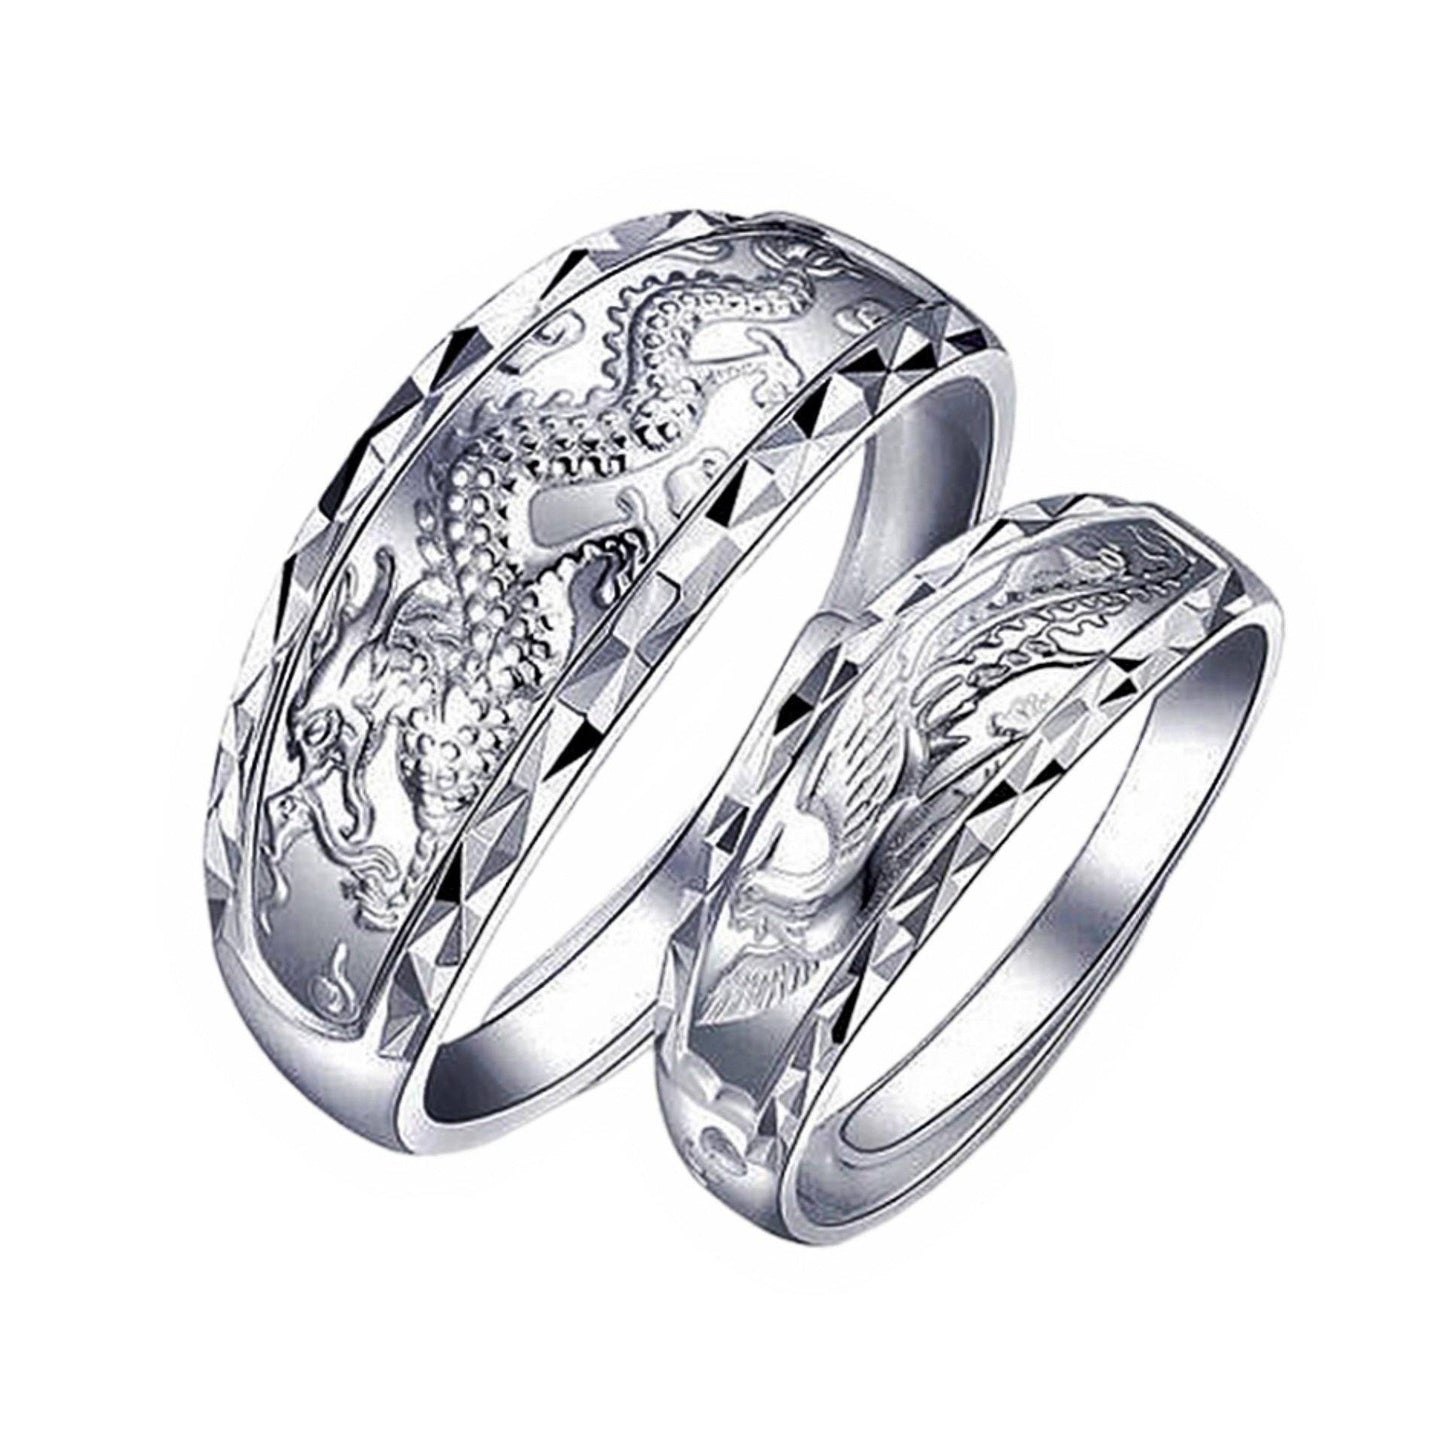 990 sterling silver wedding ring set